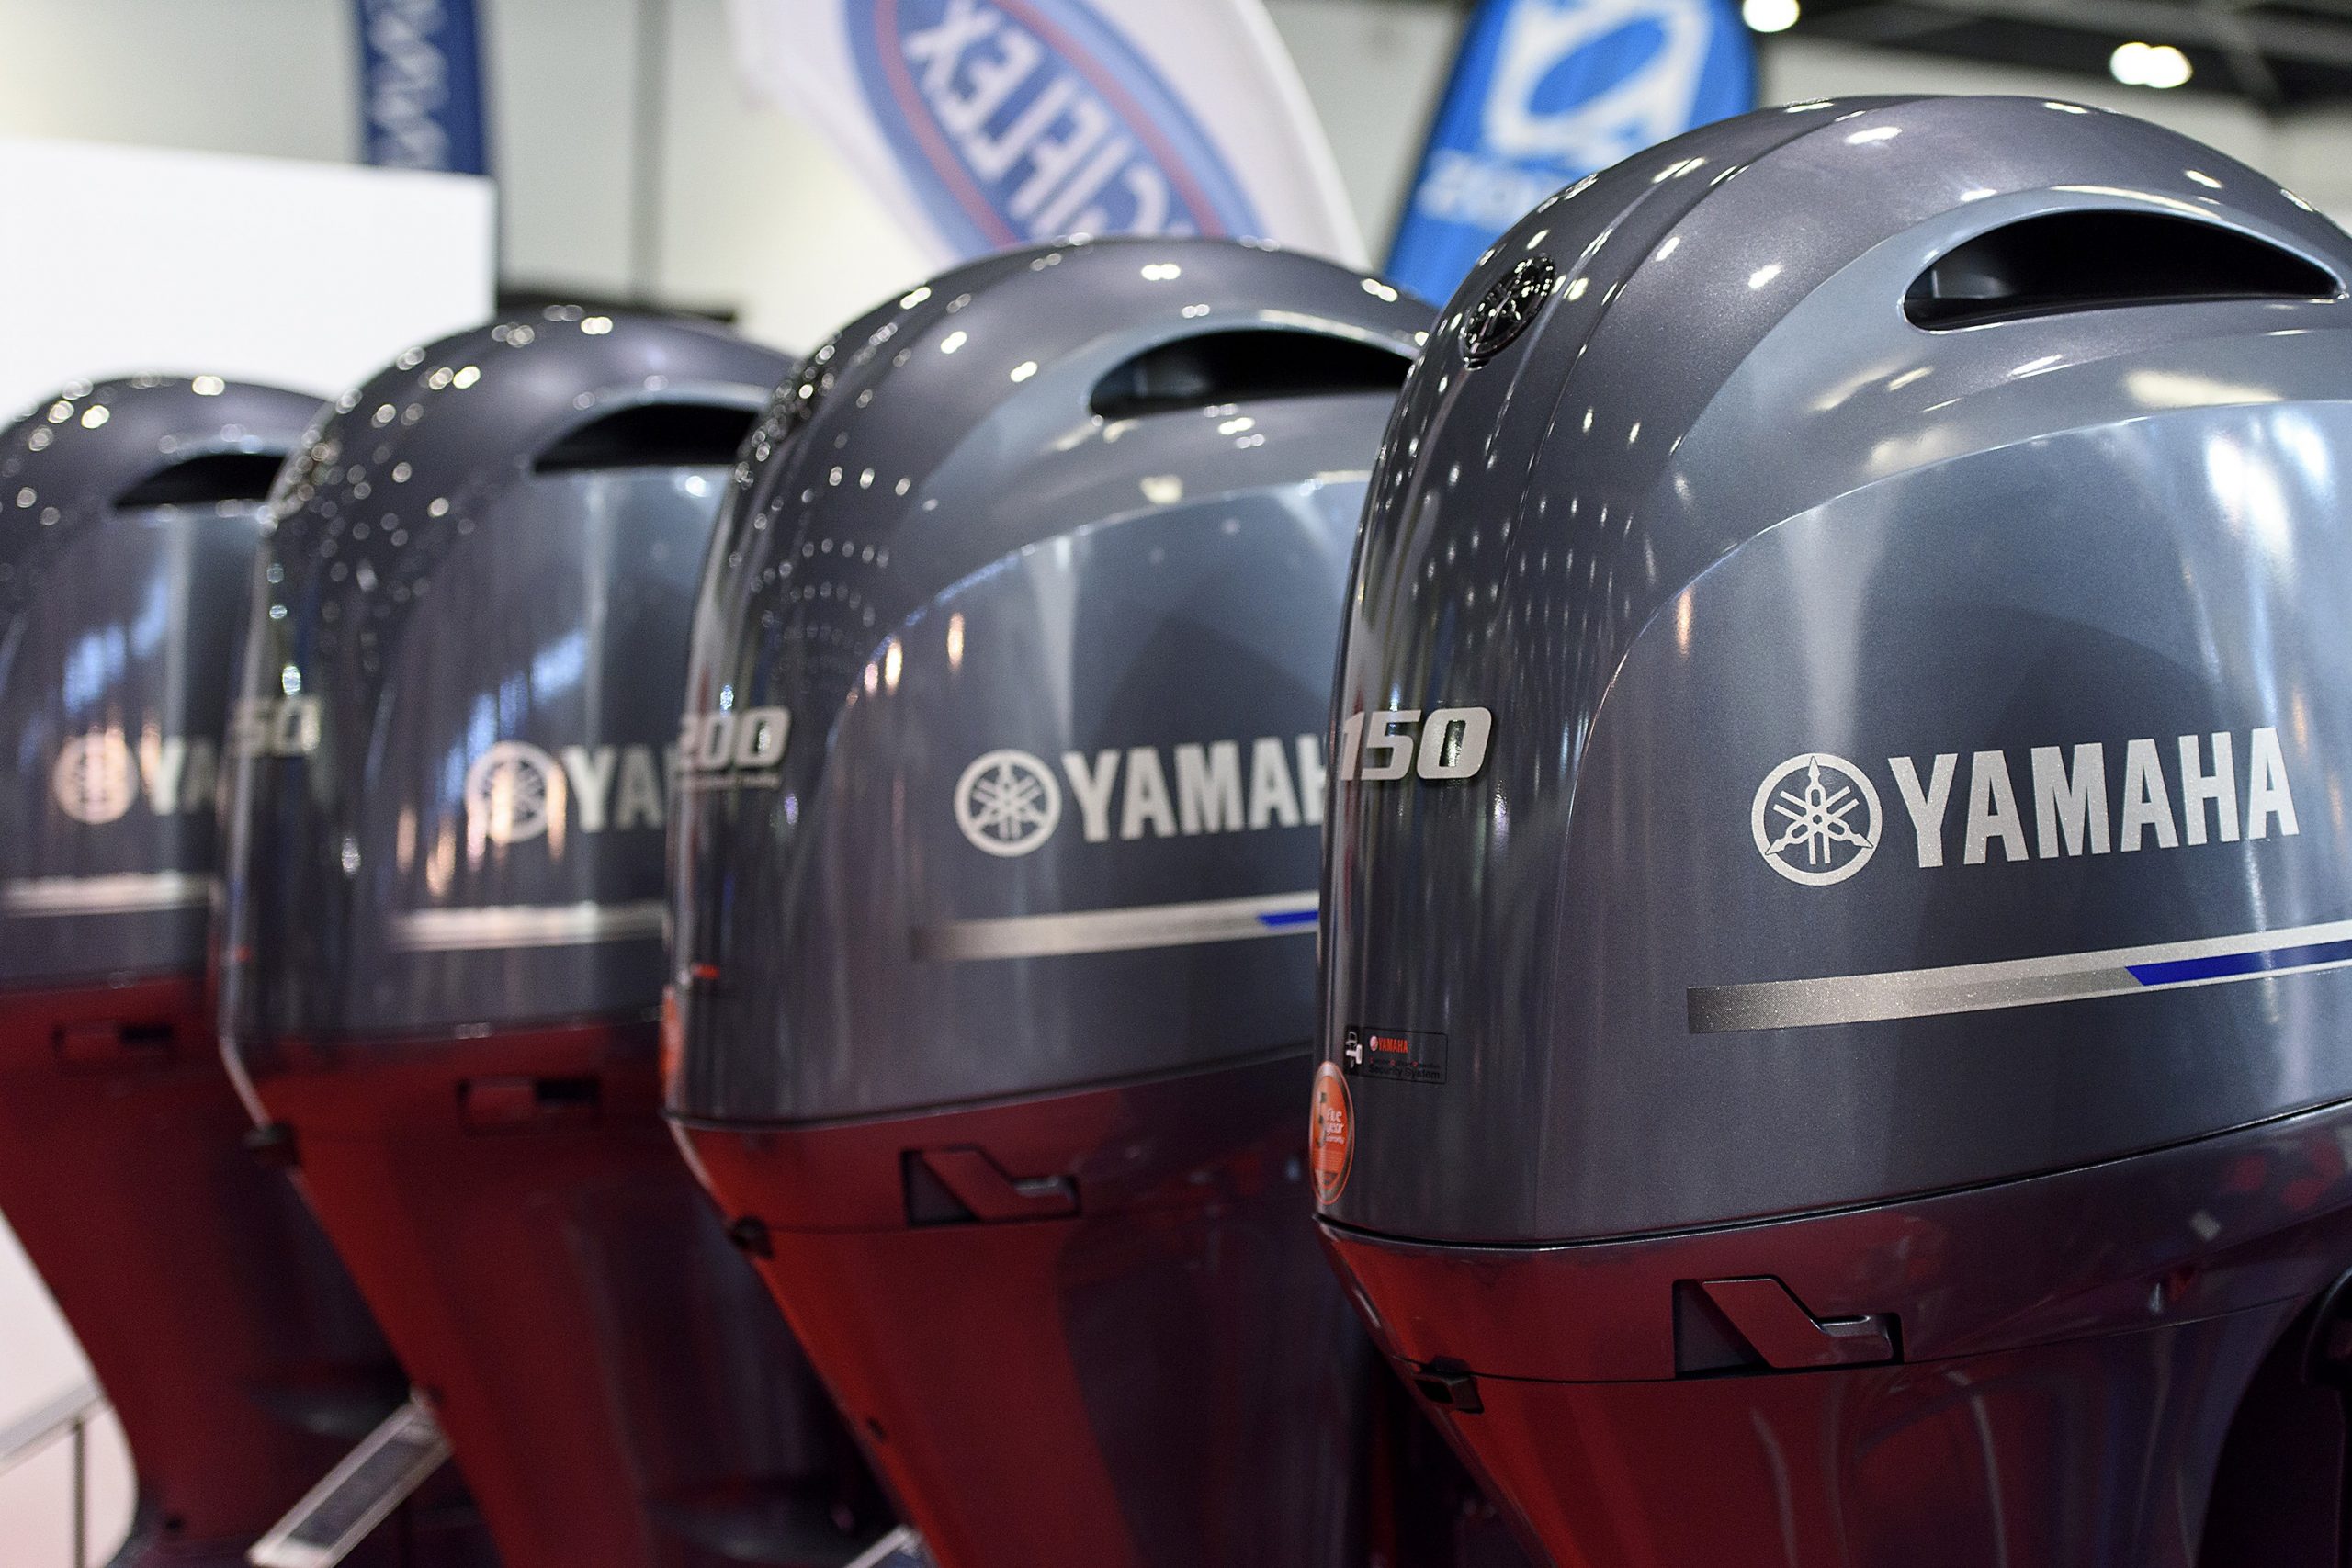 Yamaha outboard motors on display at a boat show